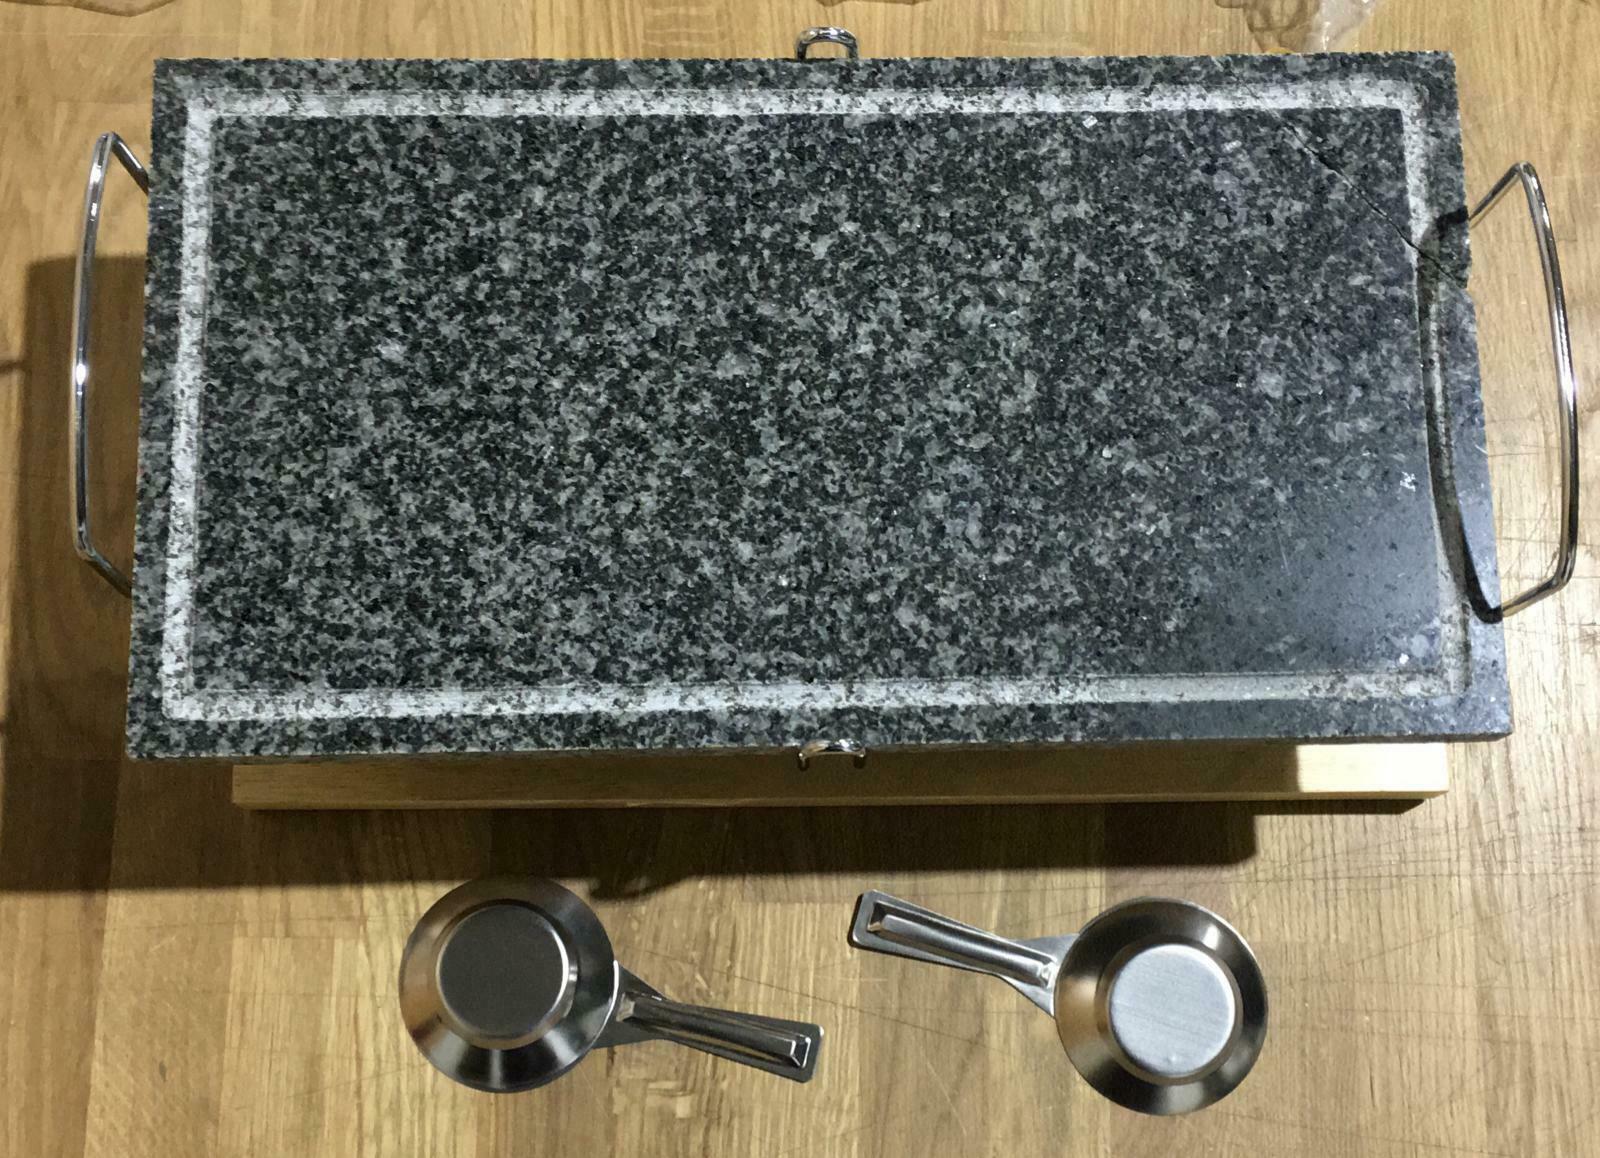 Artesa Hot Stone Grill in Gift Box- Marble- 41.5 x 22 x 15 cm-small DEFECT-3230